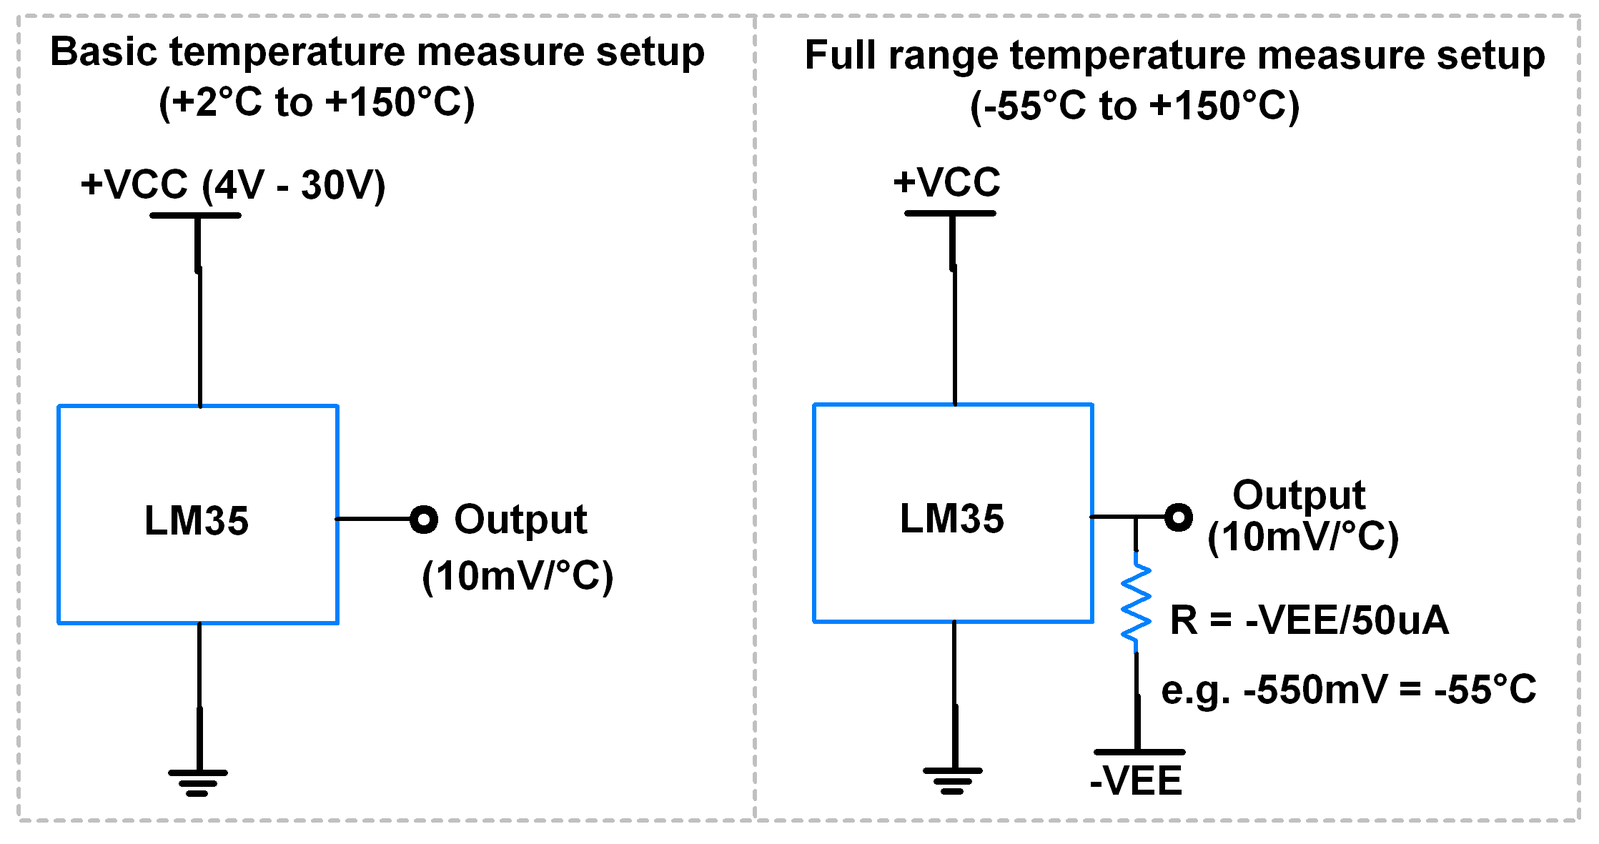 LM35 application setup